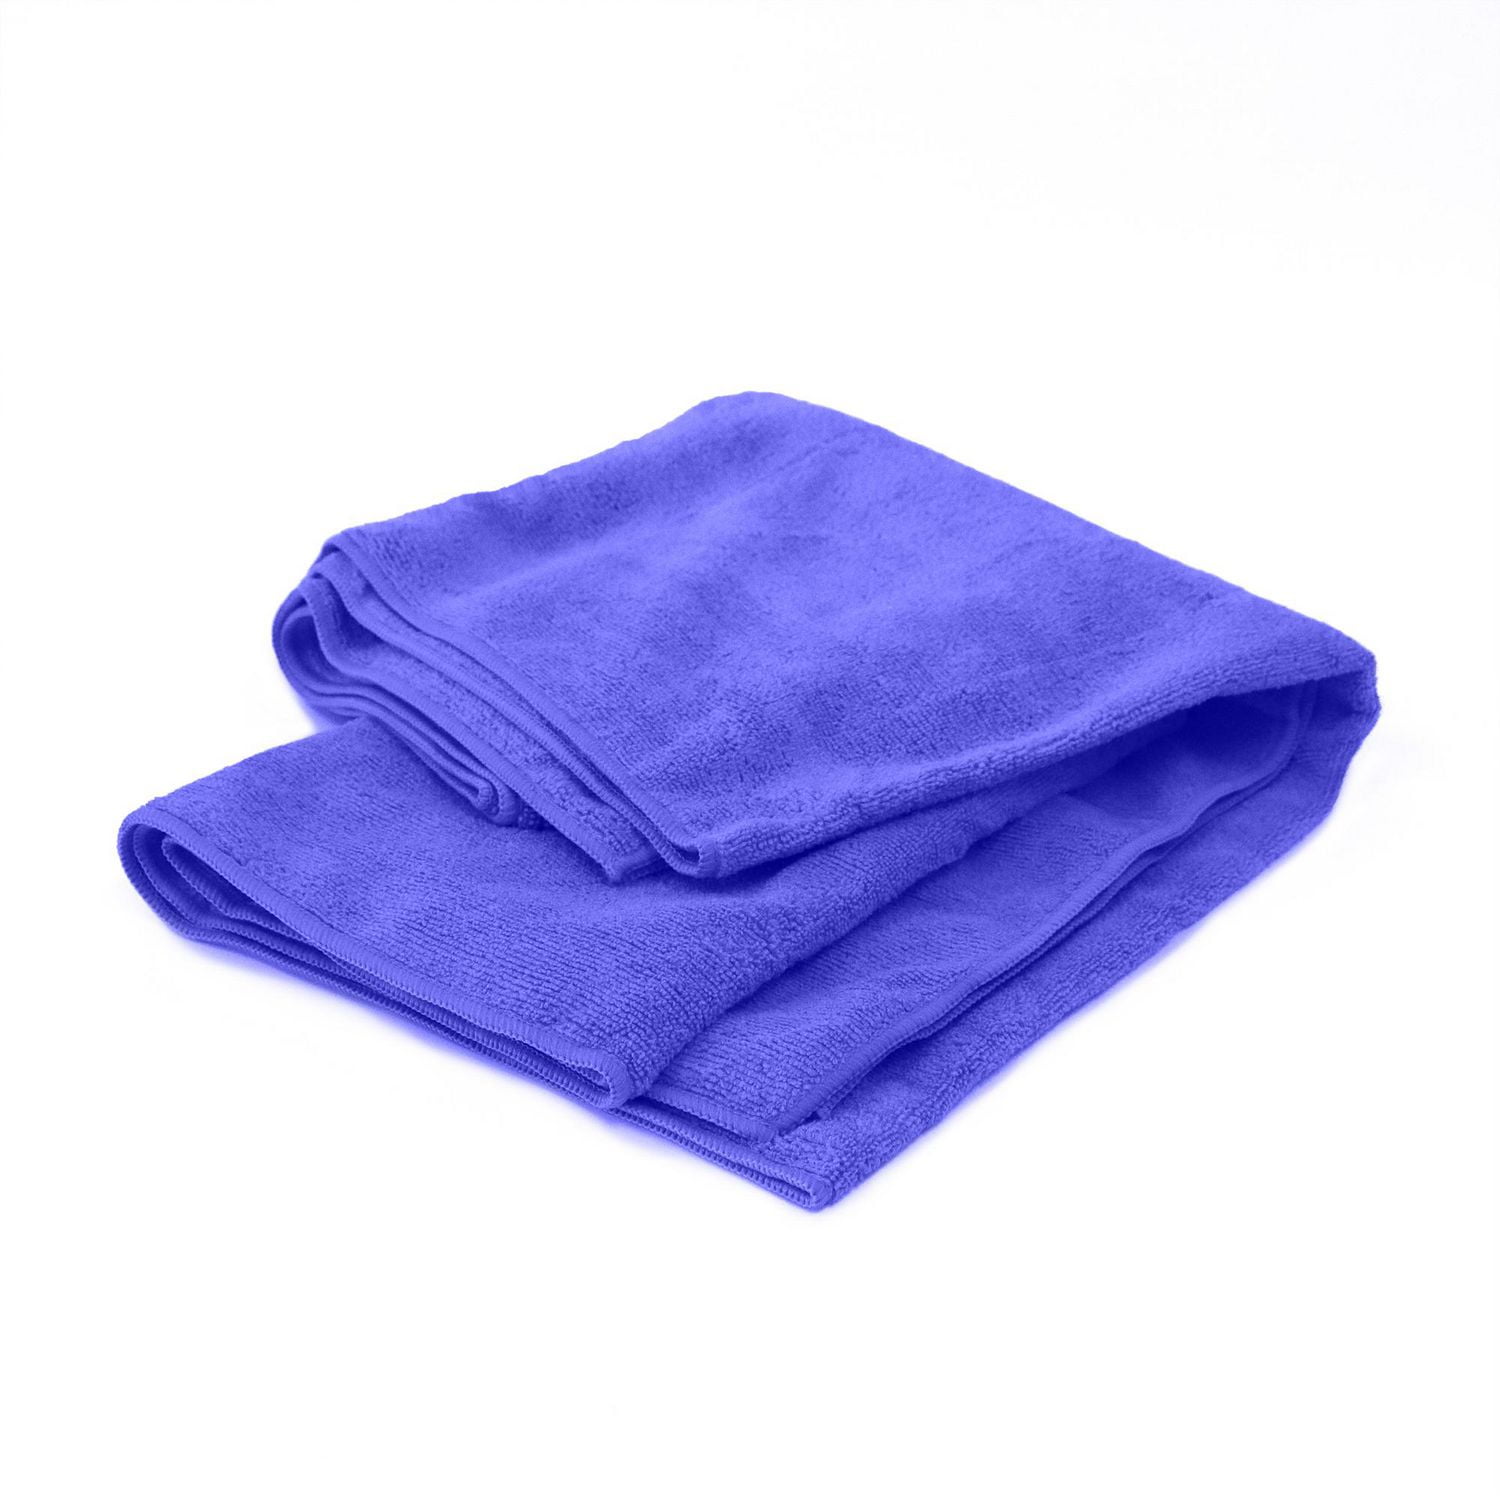 Zenzation Athletics Microfibre Hot Yoga & Fitness Towel - 72 x 24 - Blue